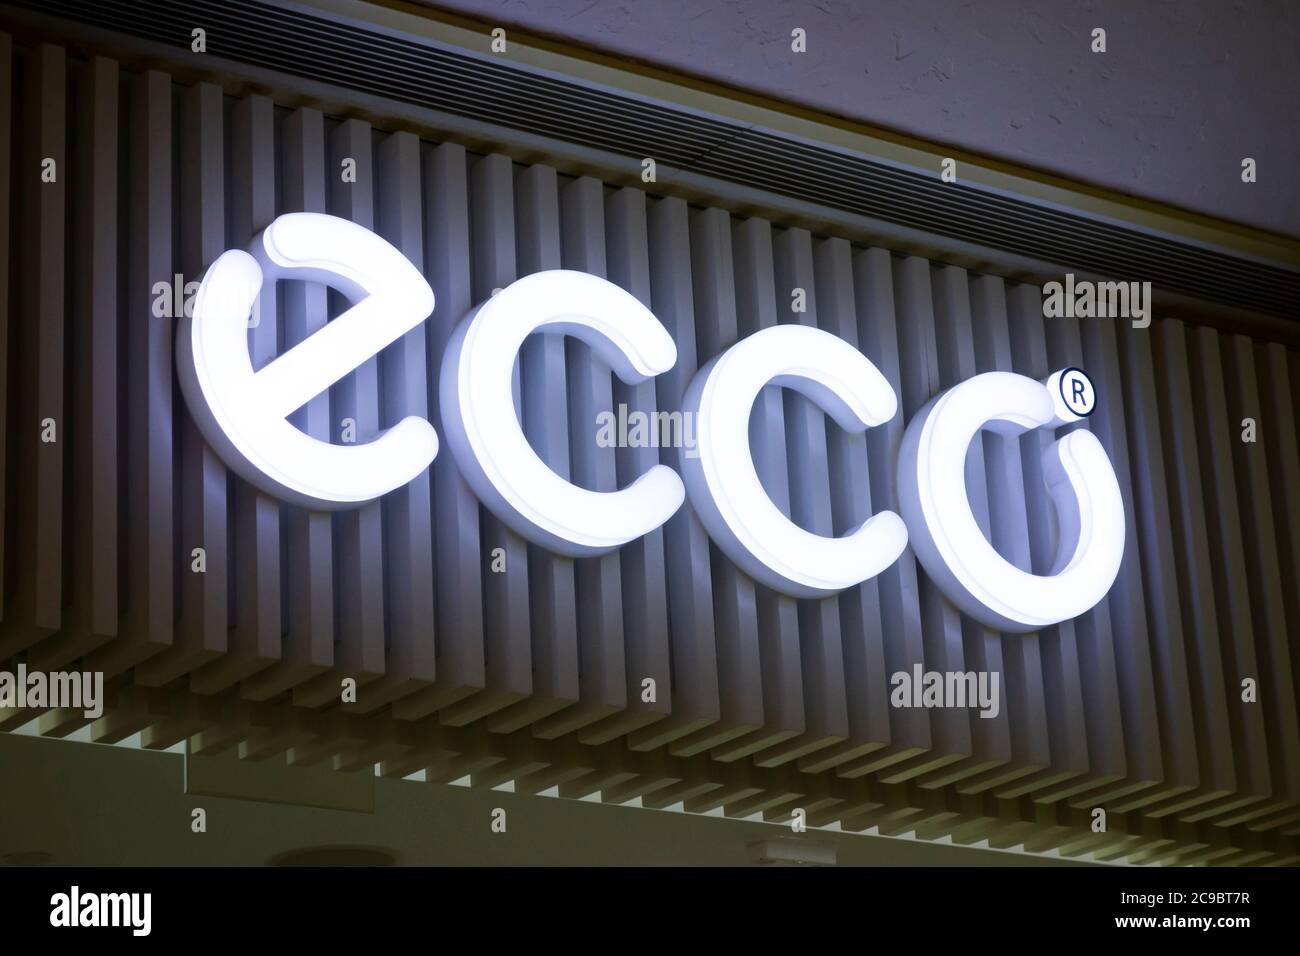 kim hørbar Lad os gøre det Ecco shop sign hi-res stock photography and images - Alamy